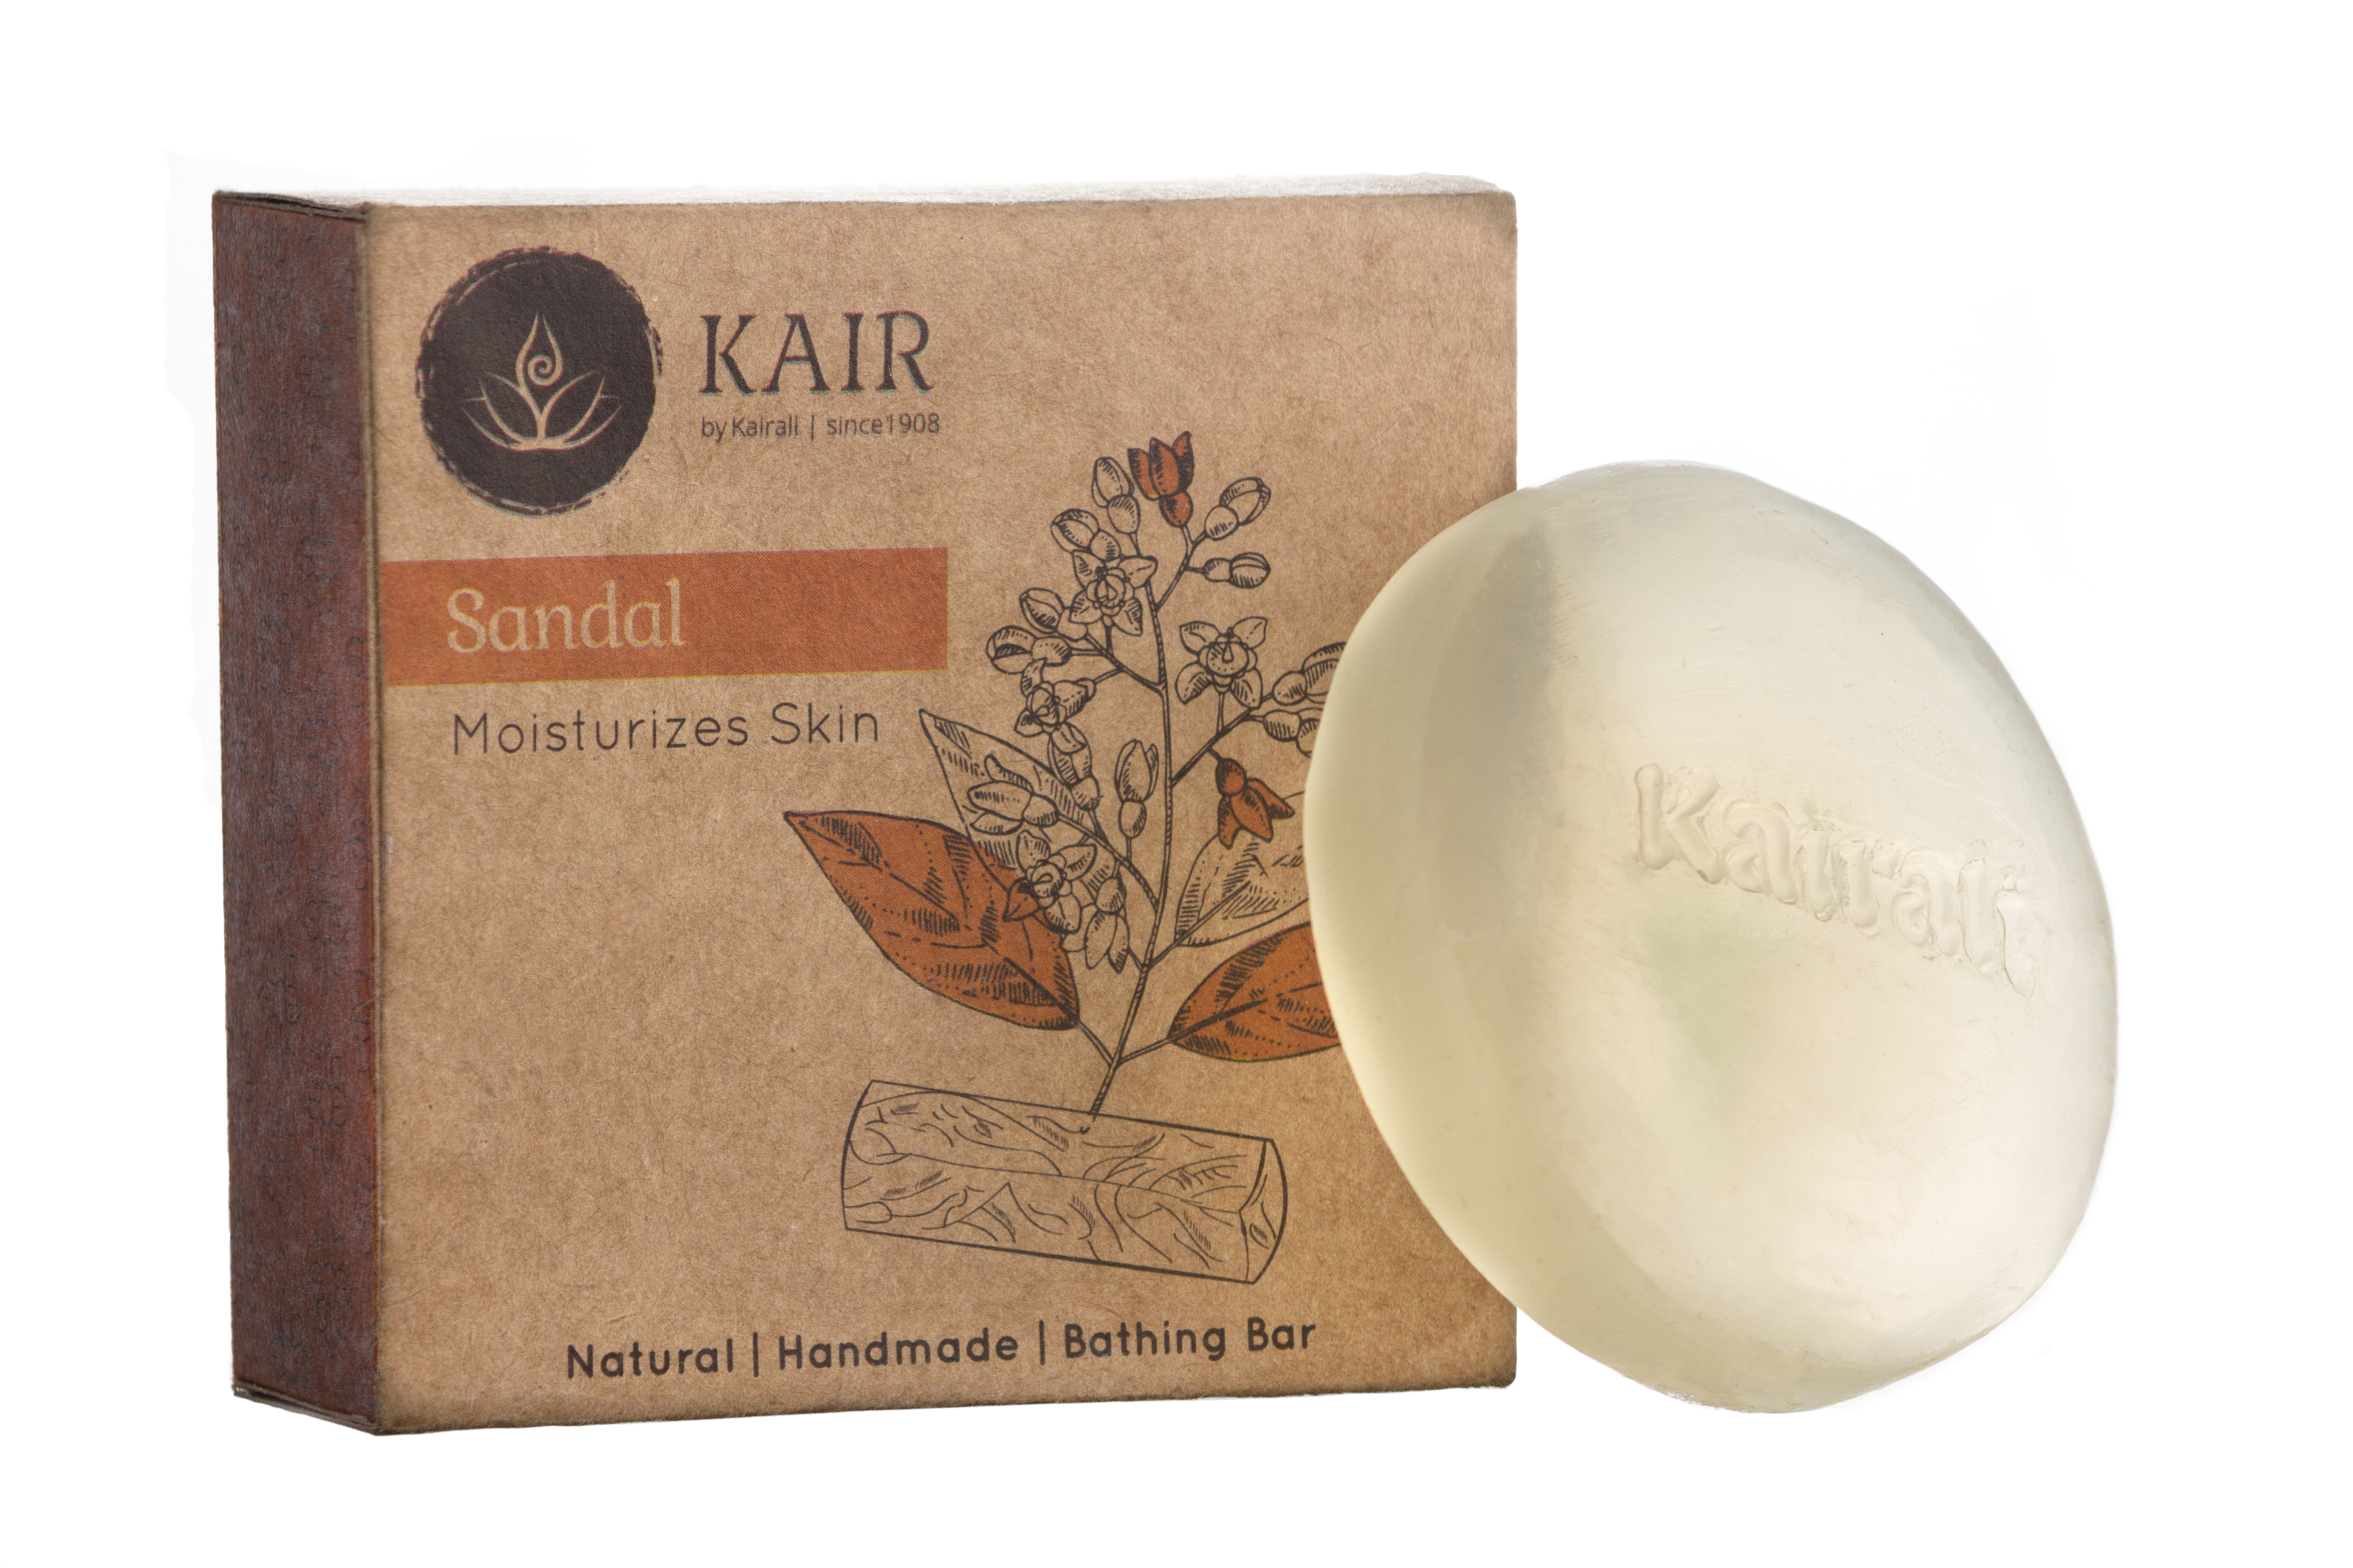 Buy Kairali Sandal Soap at Best Price Online